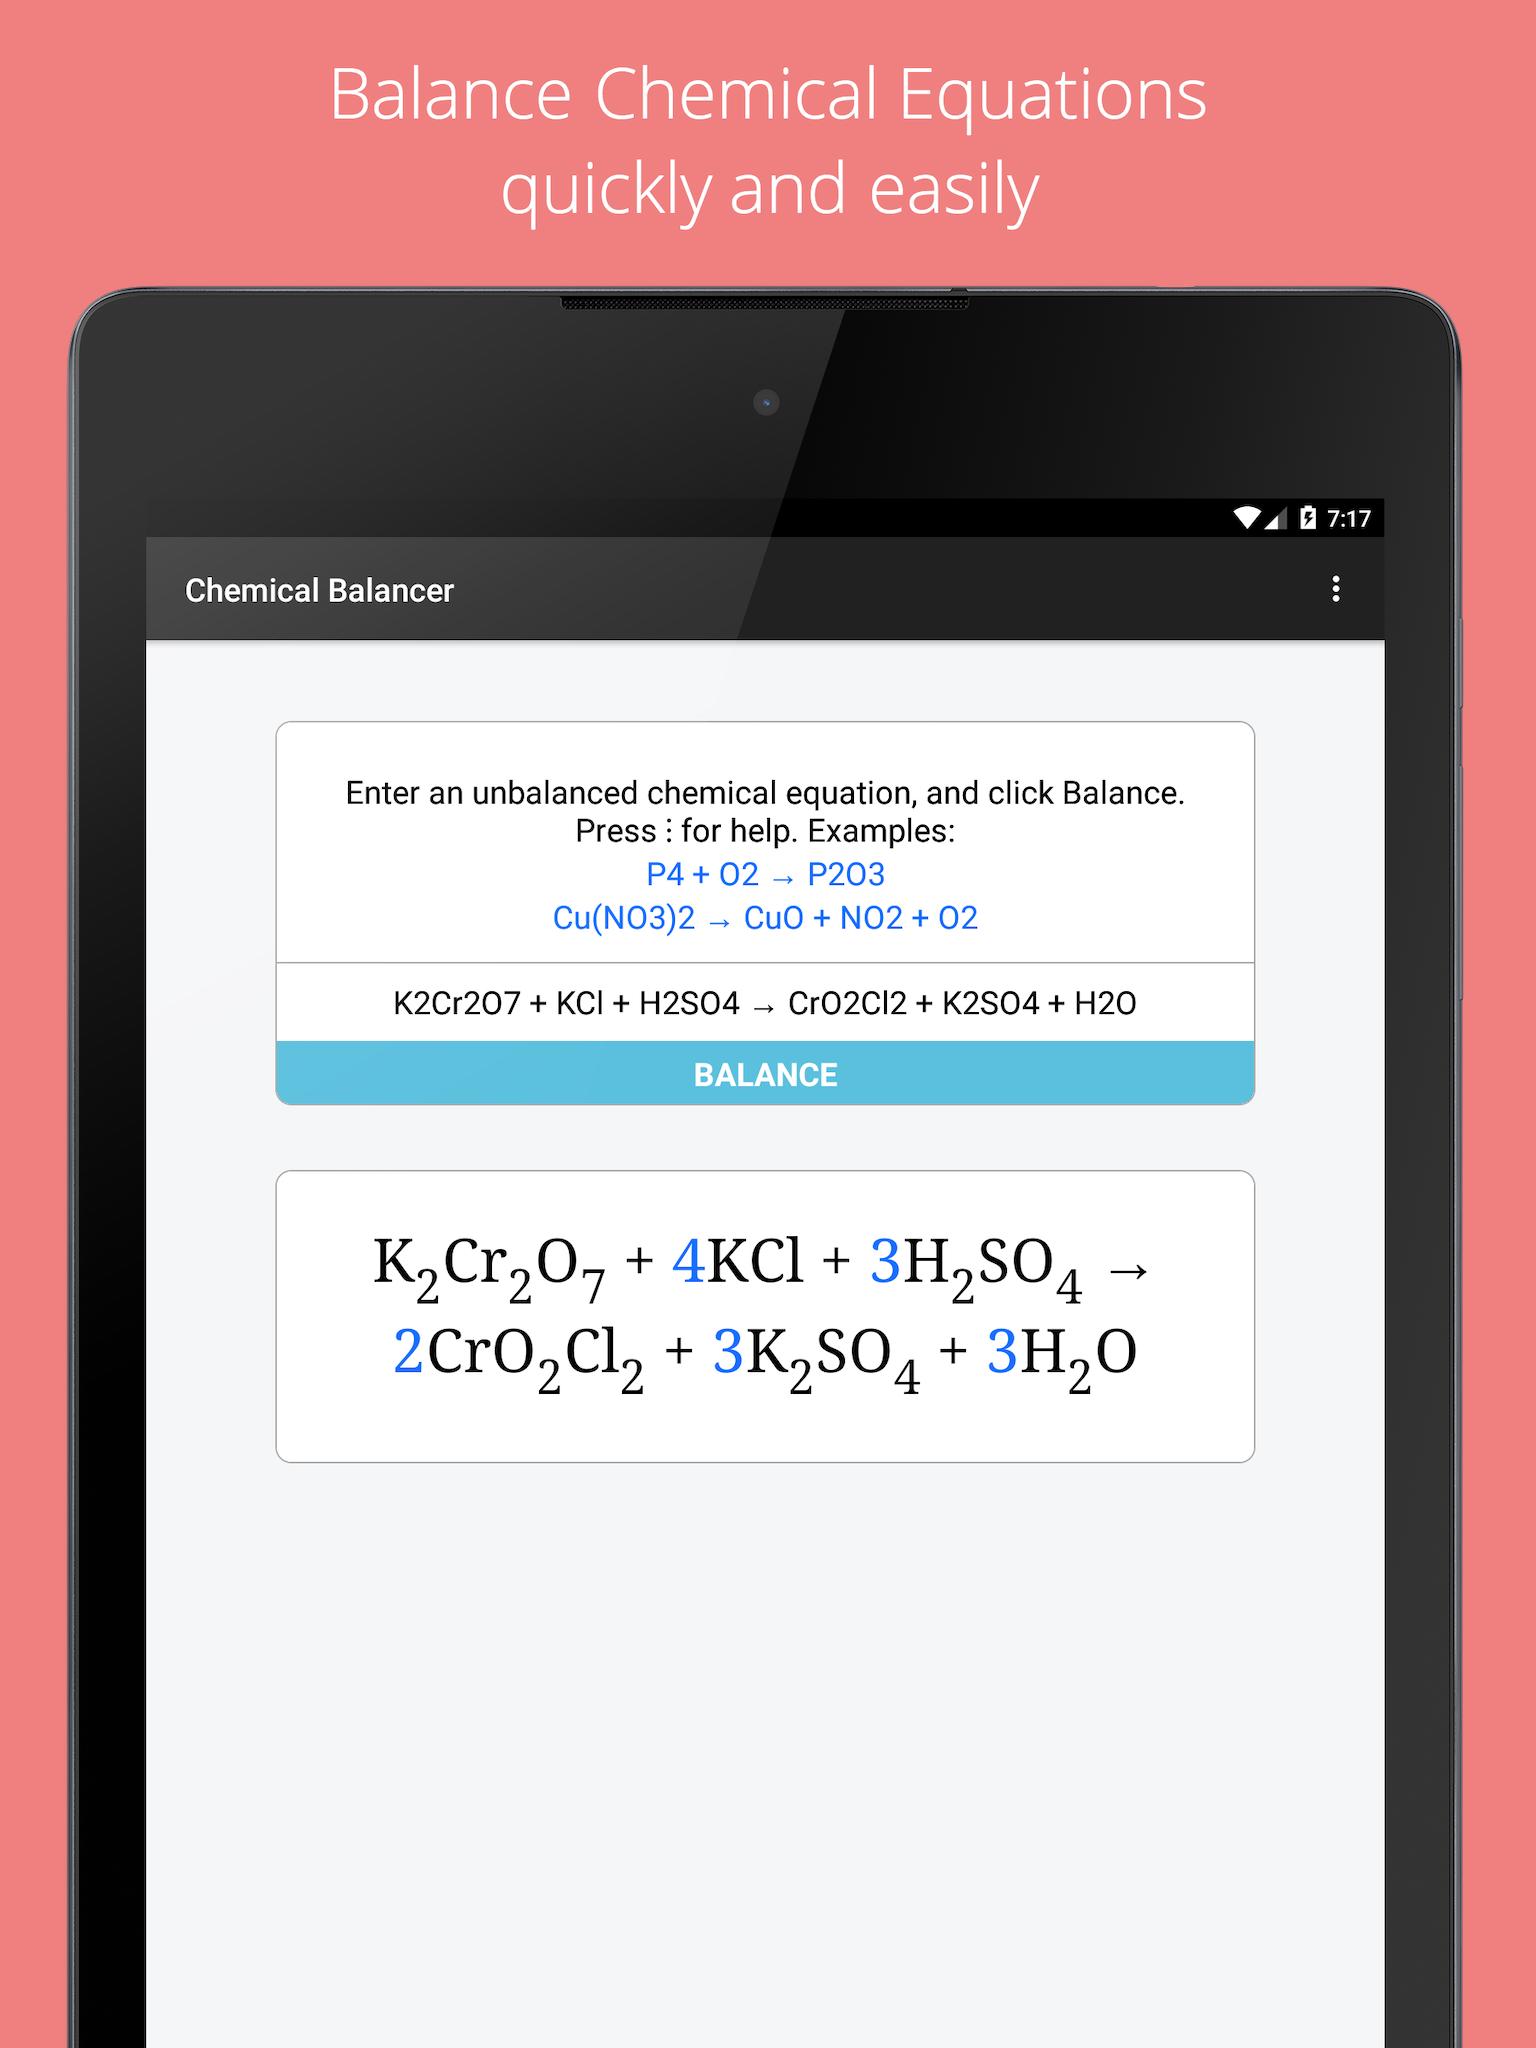 Chemical Balancer – Chemical Equation Balancer for Android - APK Download